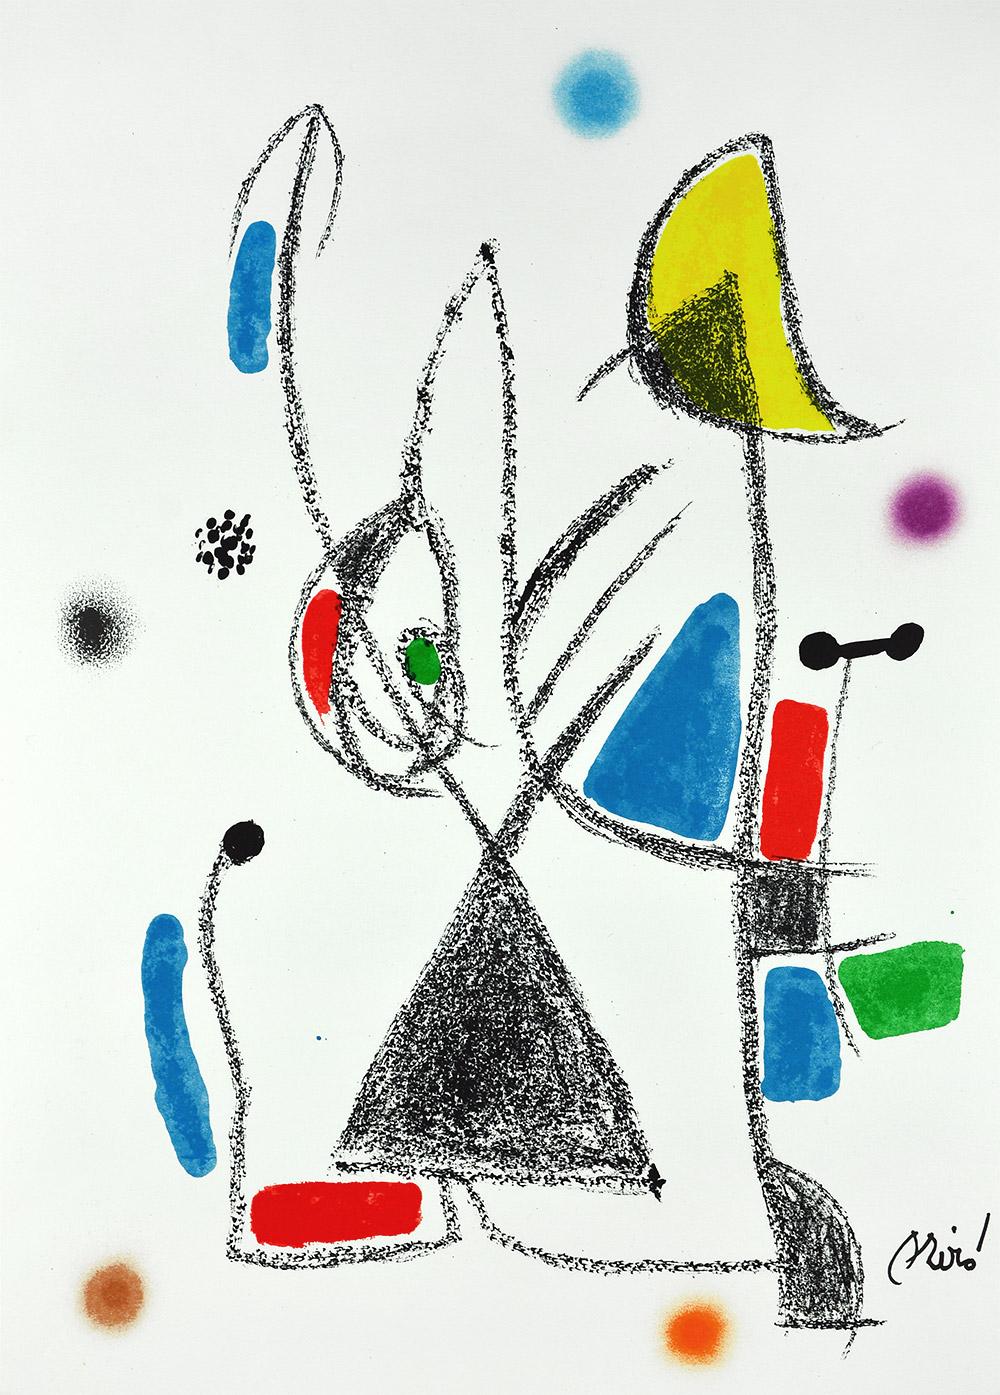 Joan Miró - Maravillas con variaciones acrósticas en el jardín de Miró XVI
Date of creation: 1975
Medium: Lithograph on Gvarro paper
Edition: 1500
Size: 49,5 x 35,5 cm
Condition: In very good conditions and never framed
Observations: Lithograph on